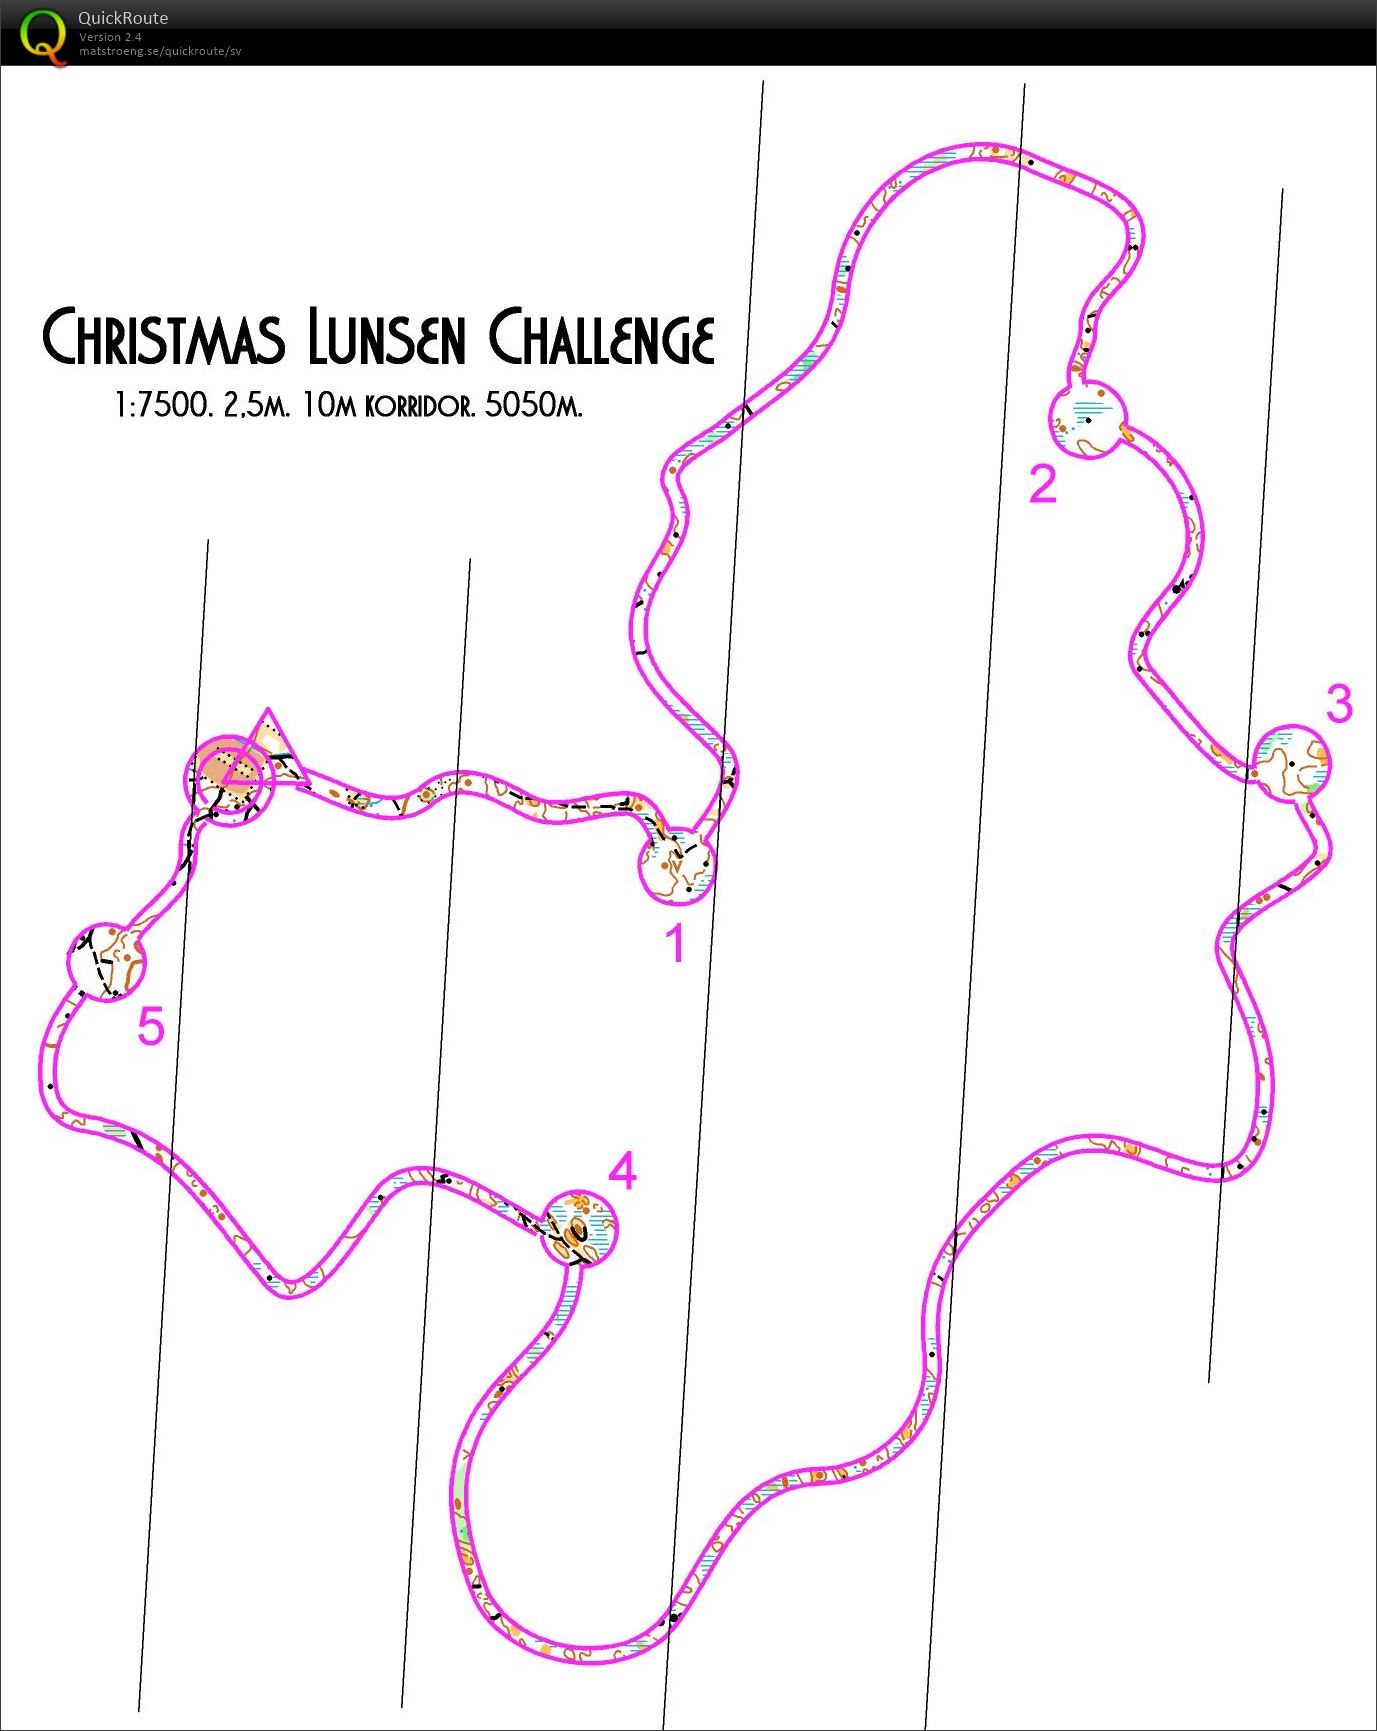 Christmas Lunsen Challenge (24.12.2016)